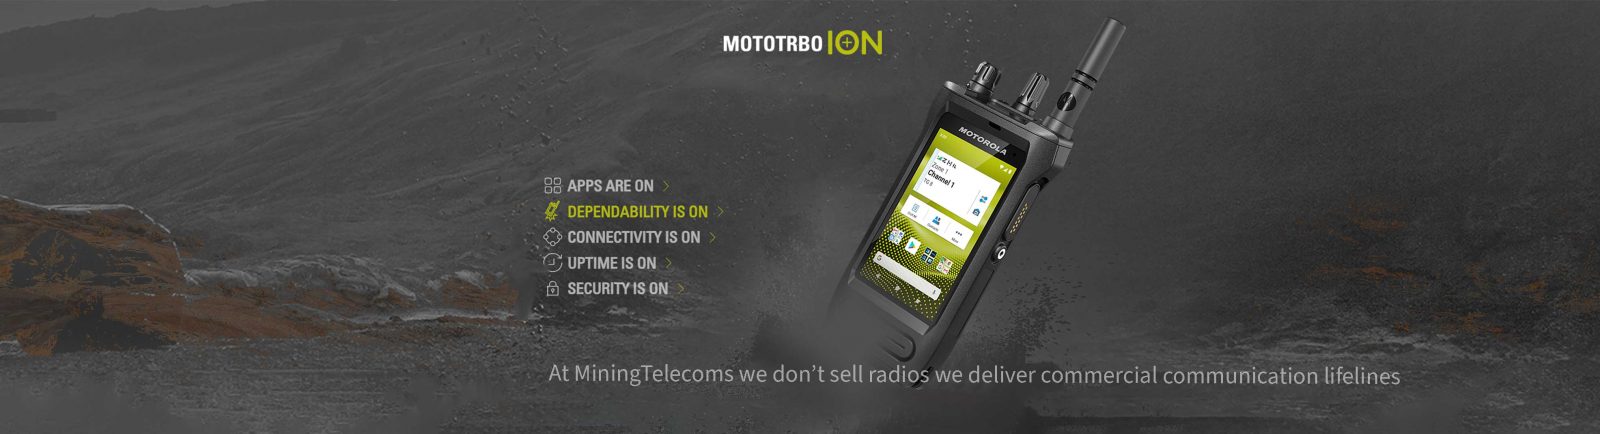 MOTOTRBO-ION-Motorola-Two-Way-Radios